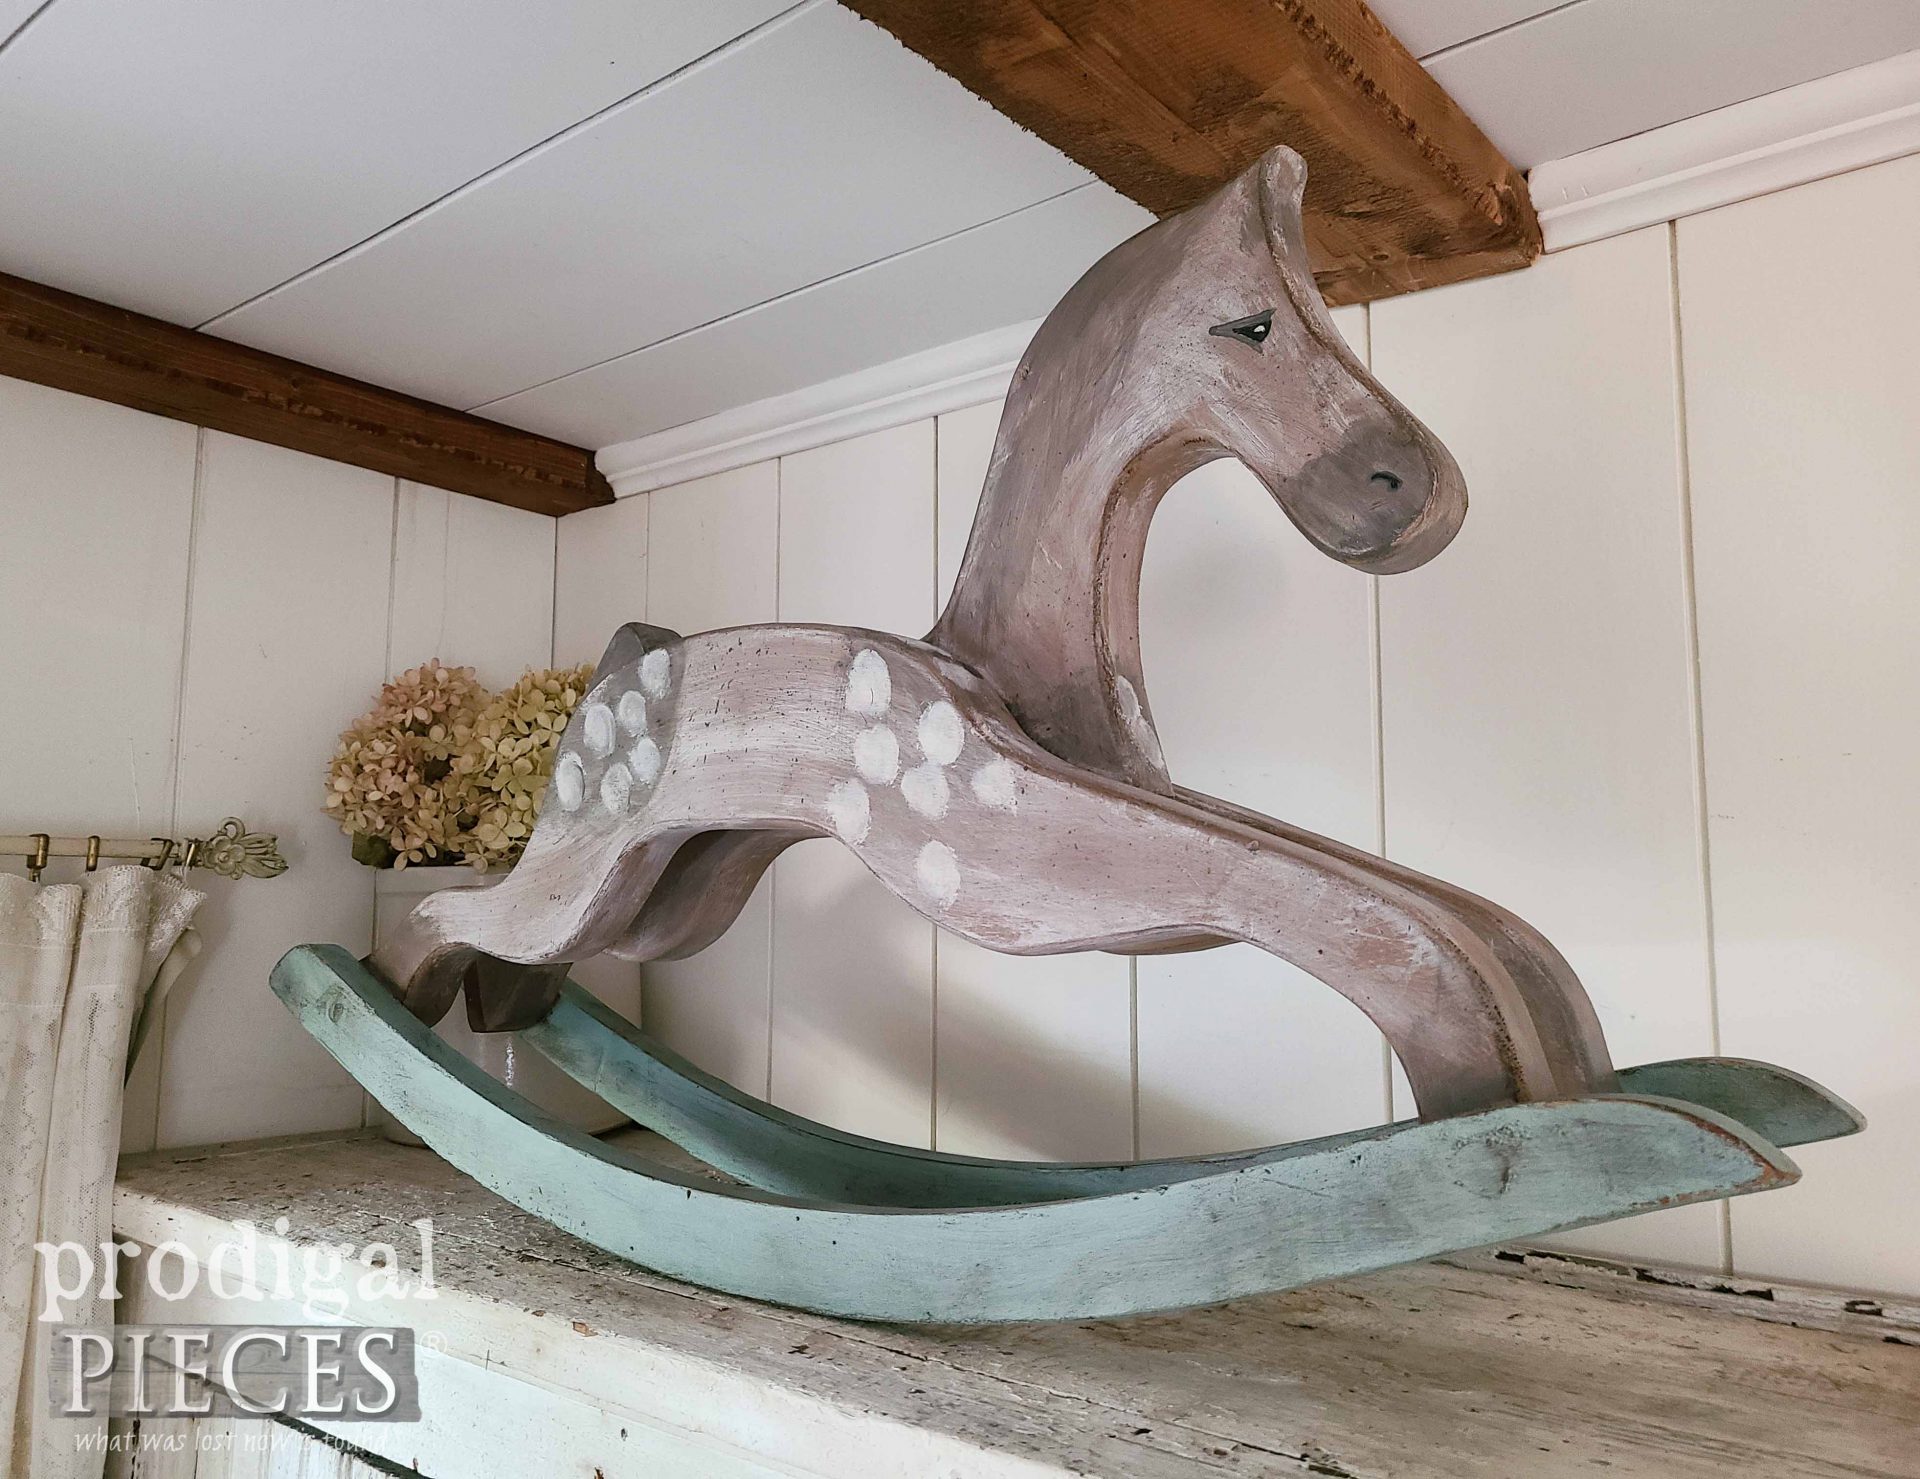 Rustic Farmhouse Style Antique Rocking Horse by Larissa of Prodigal Pieces | prodigalpieces.com #prodigalpieces #farmhouse #handmade